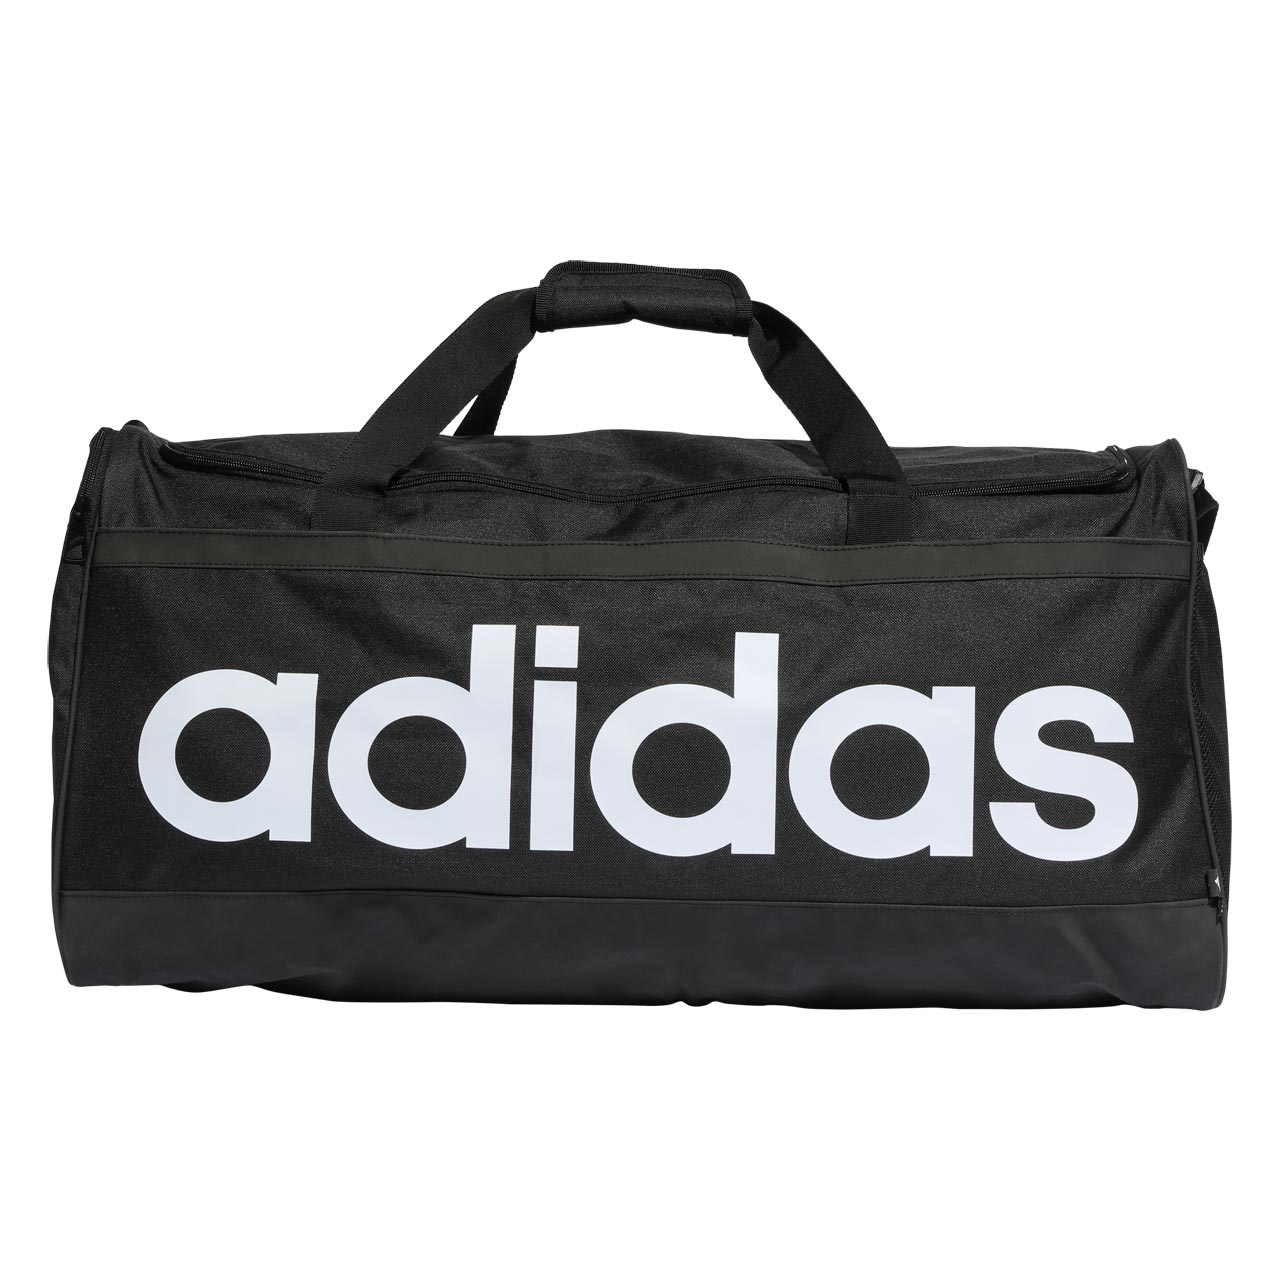 Sporttasche Essentials Duffelbag L